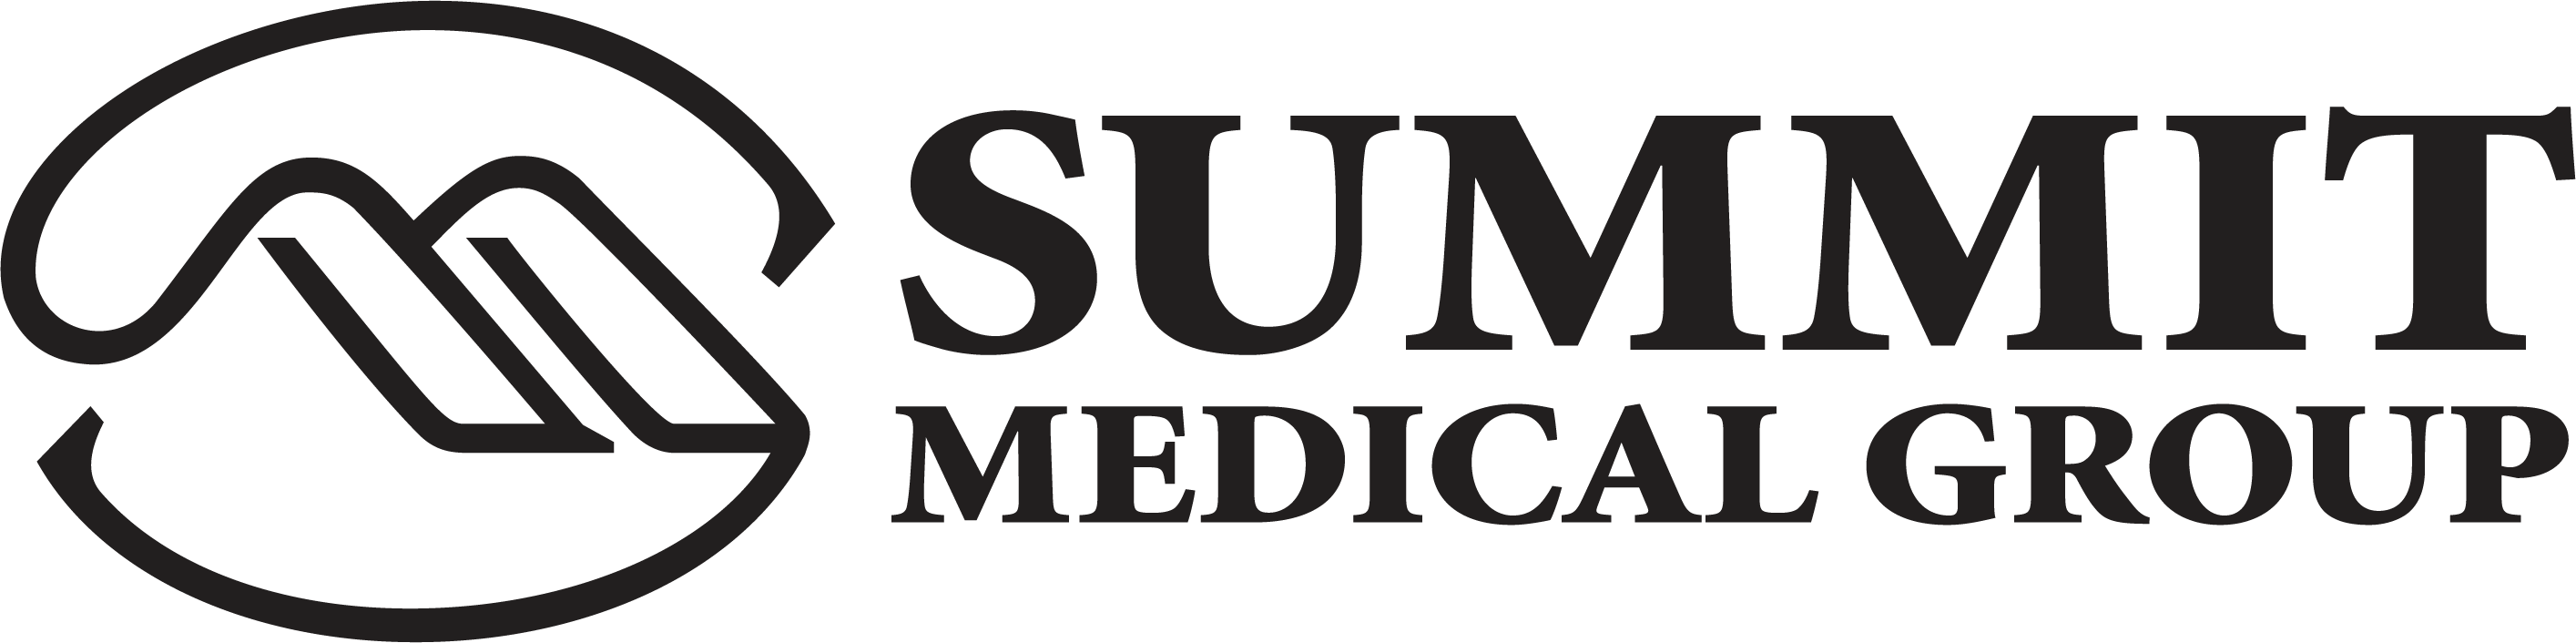 summit-medical-group 